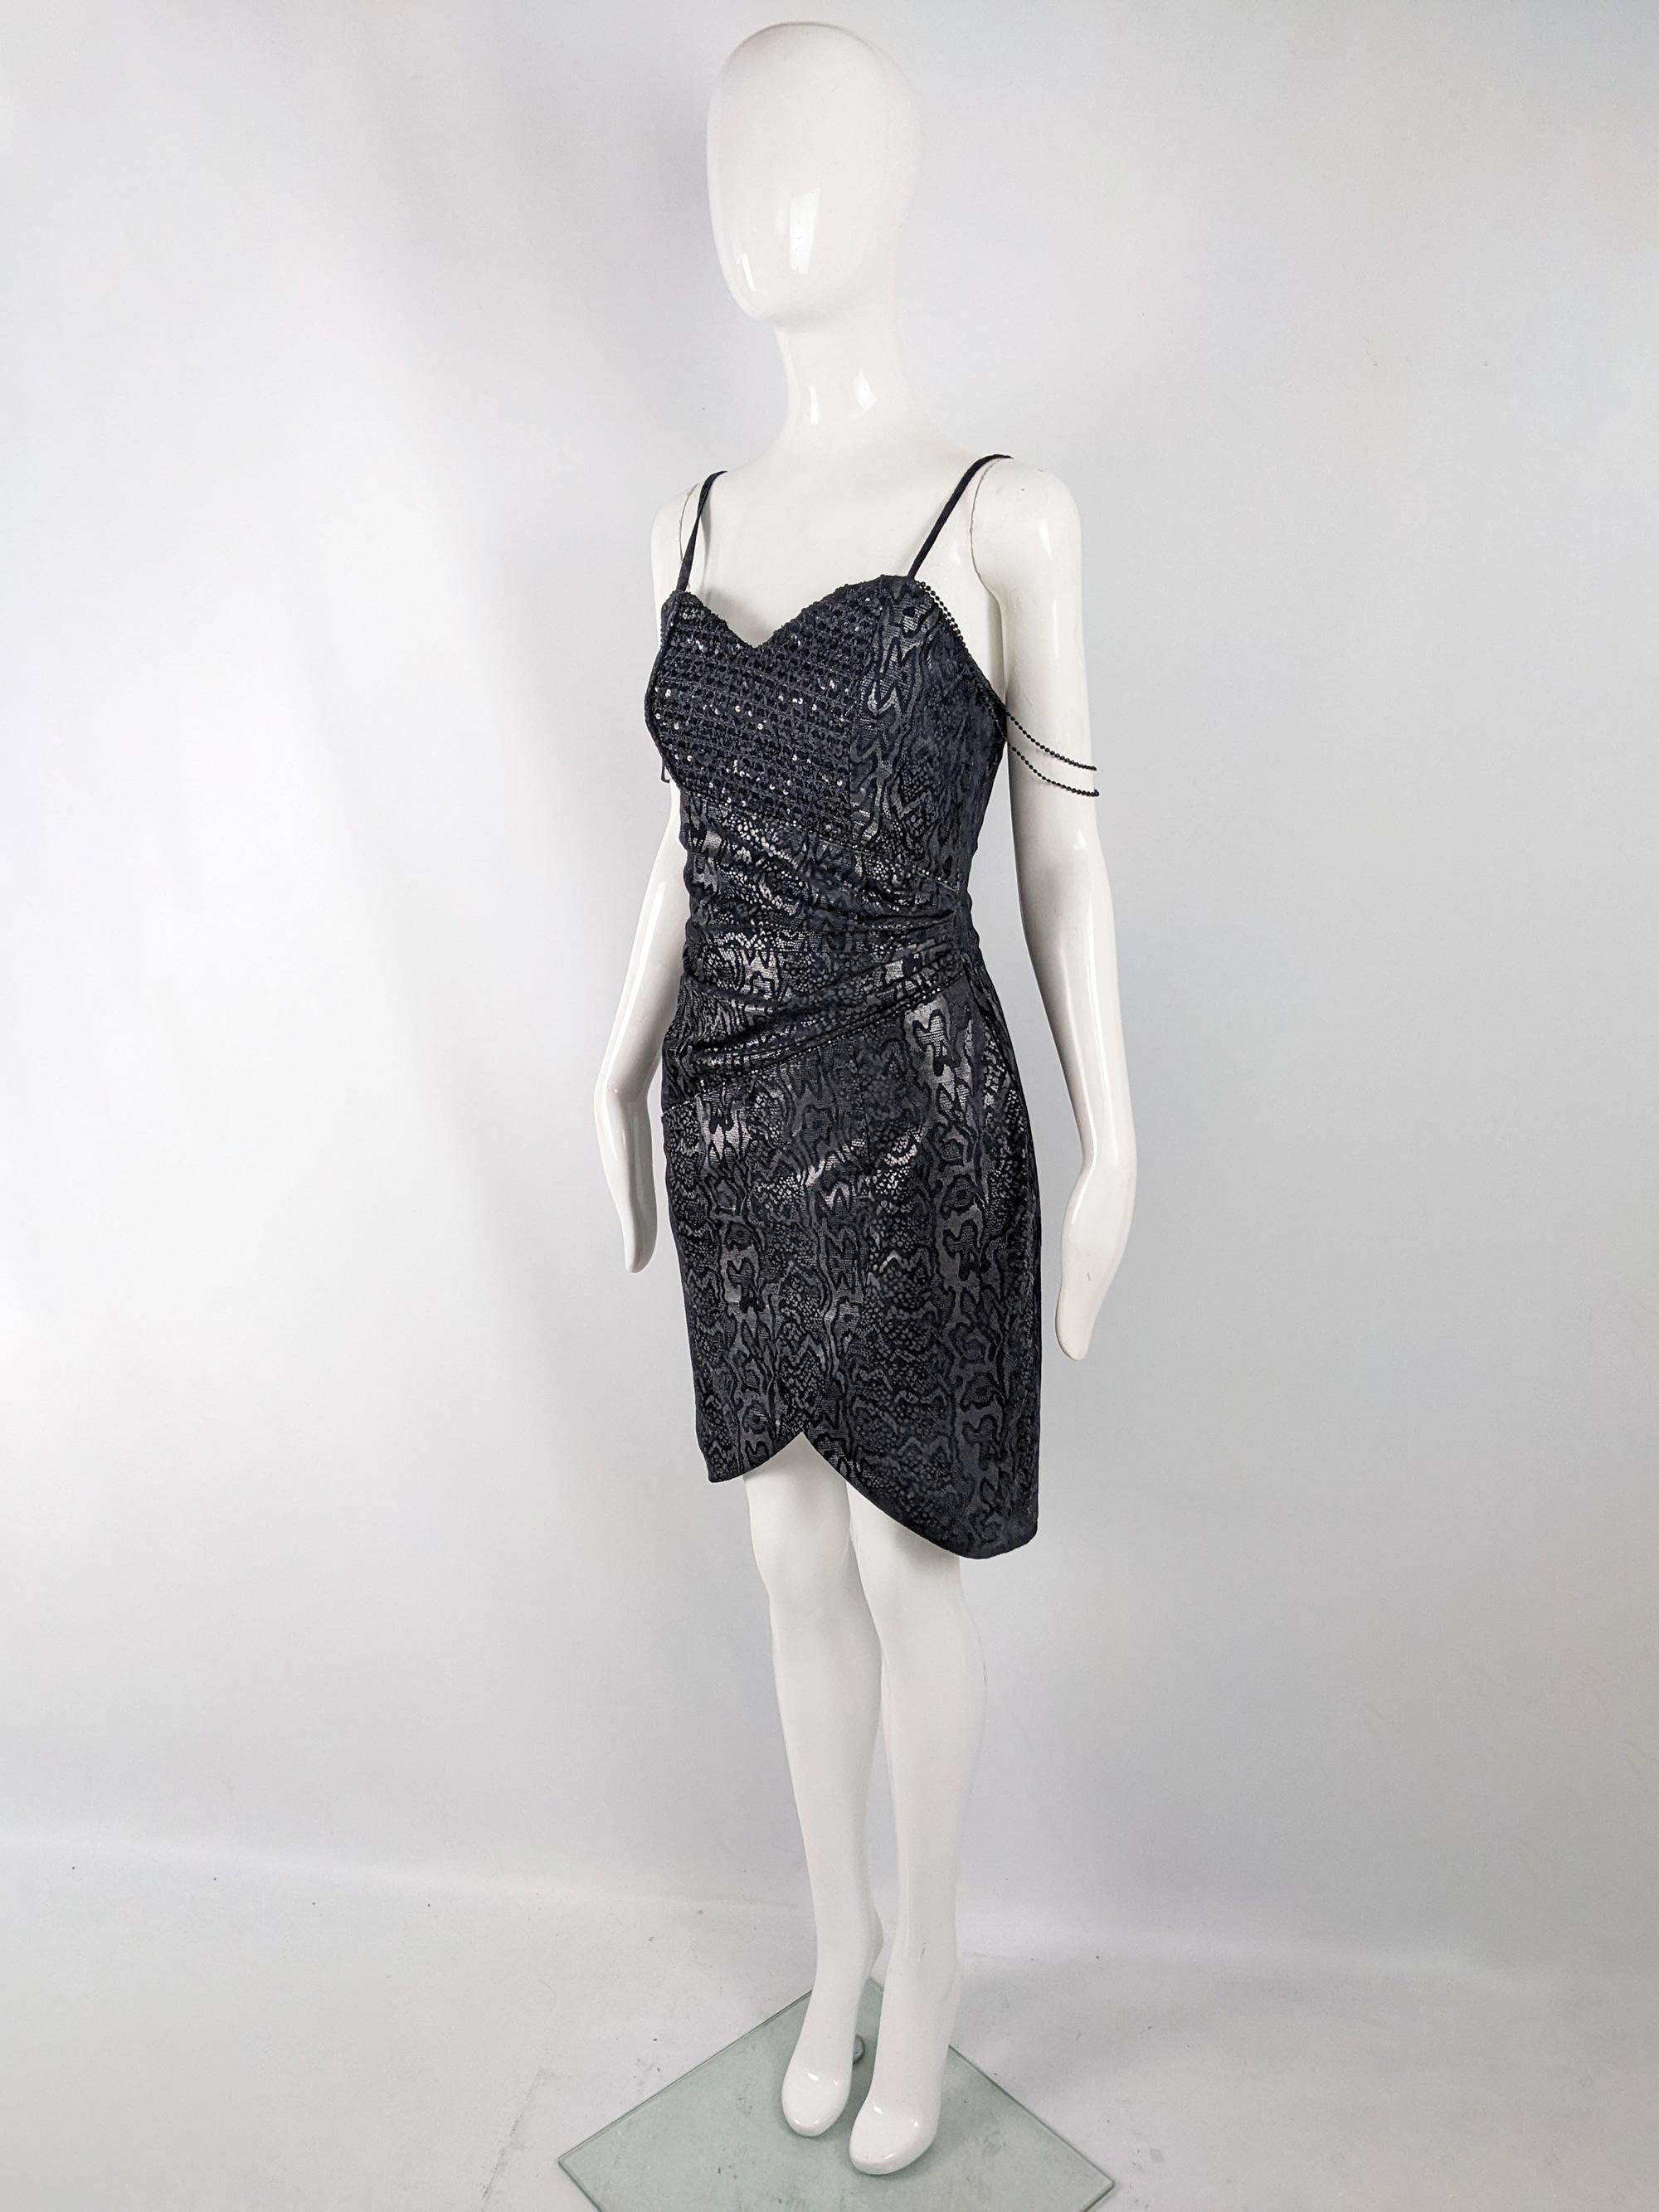 Jacques Sac Vintage Black Leather Snakeskin Print Sequin Real Leather Dress 1